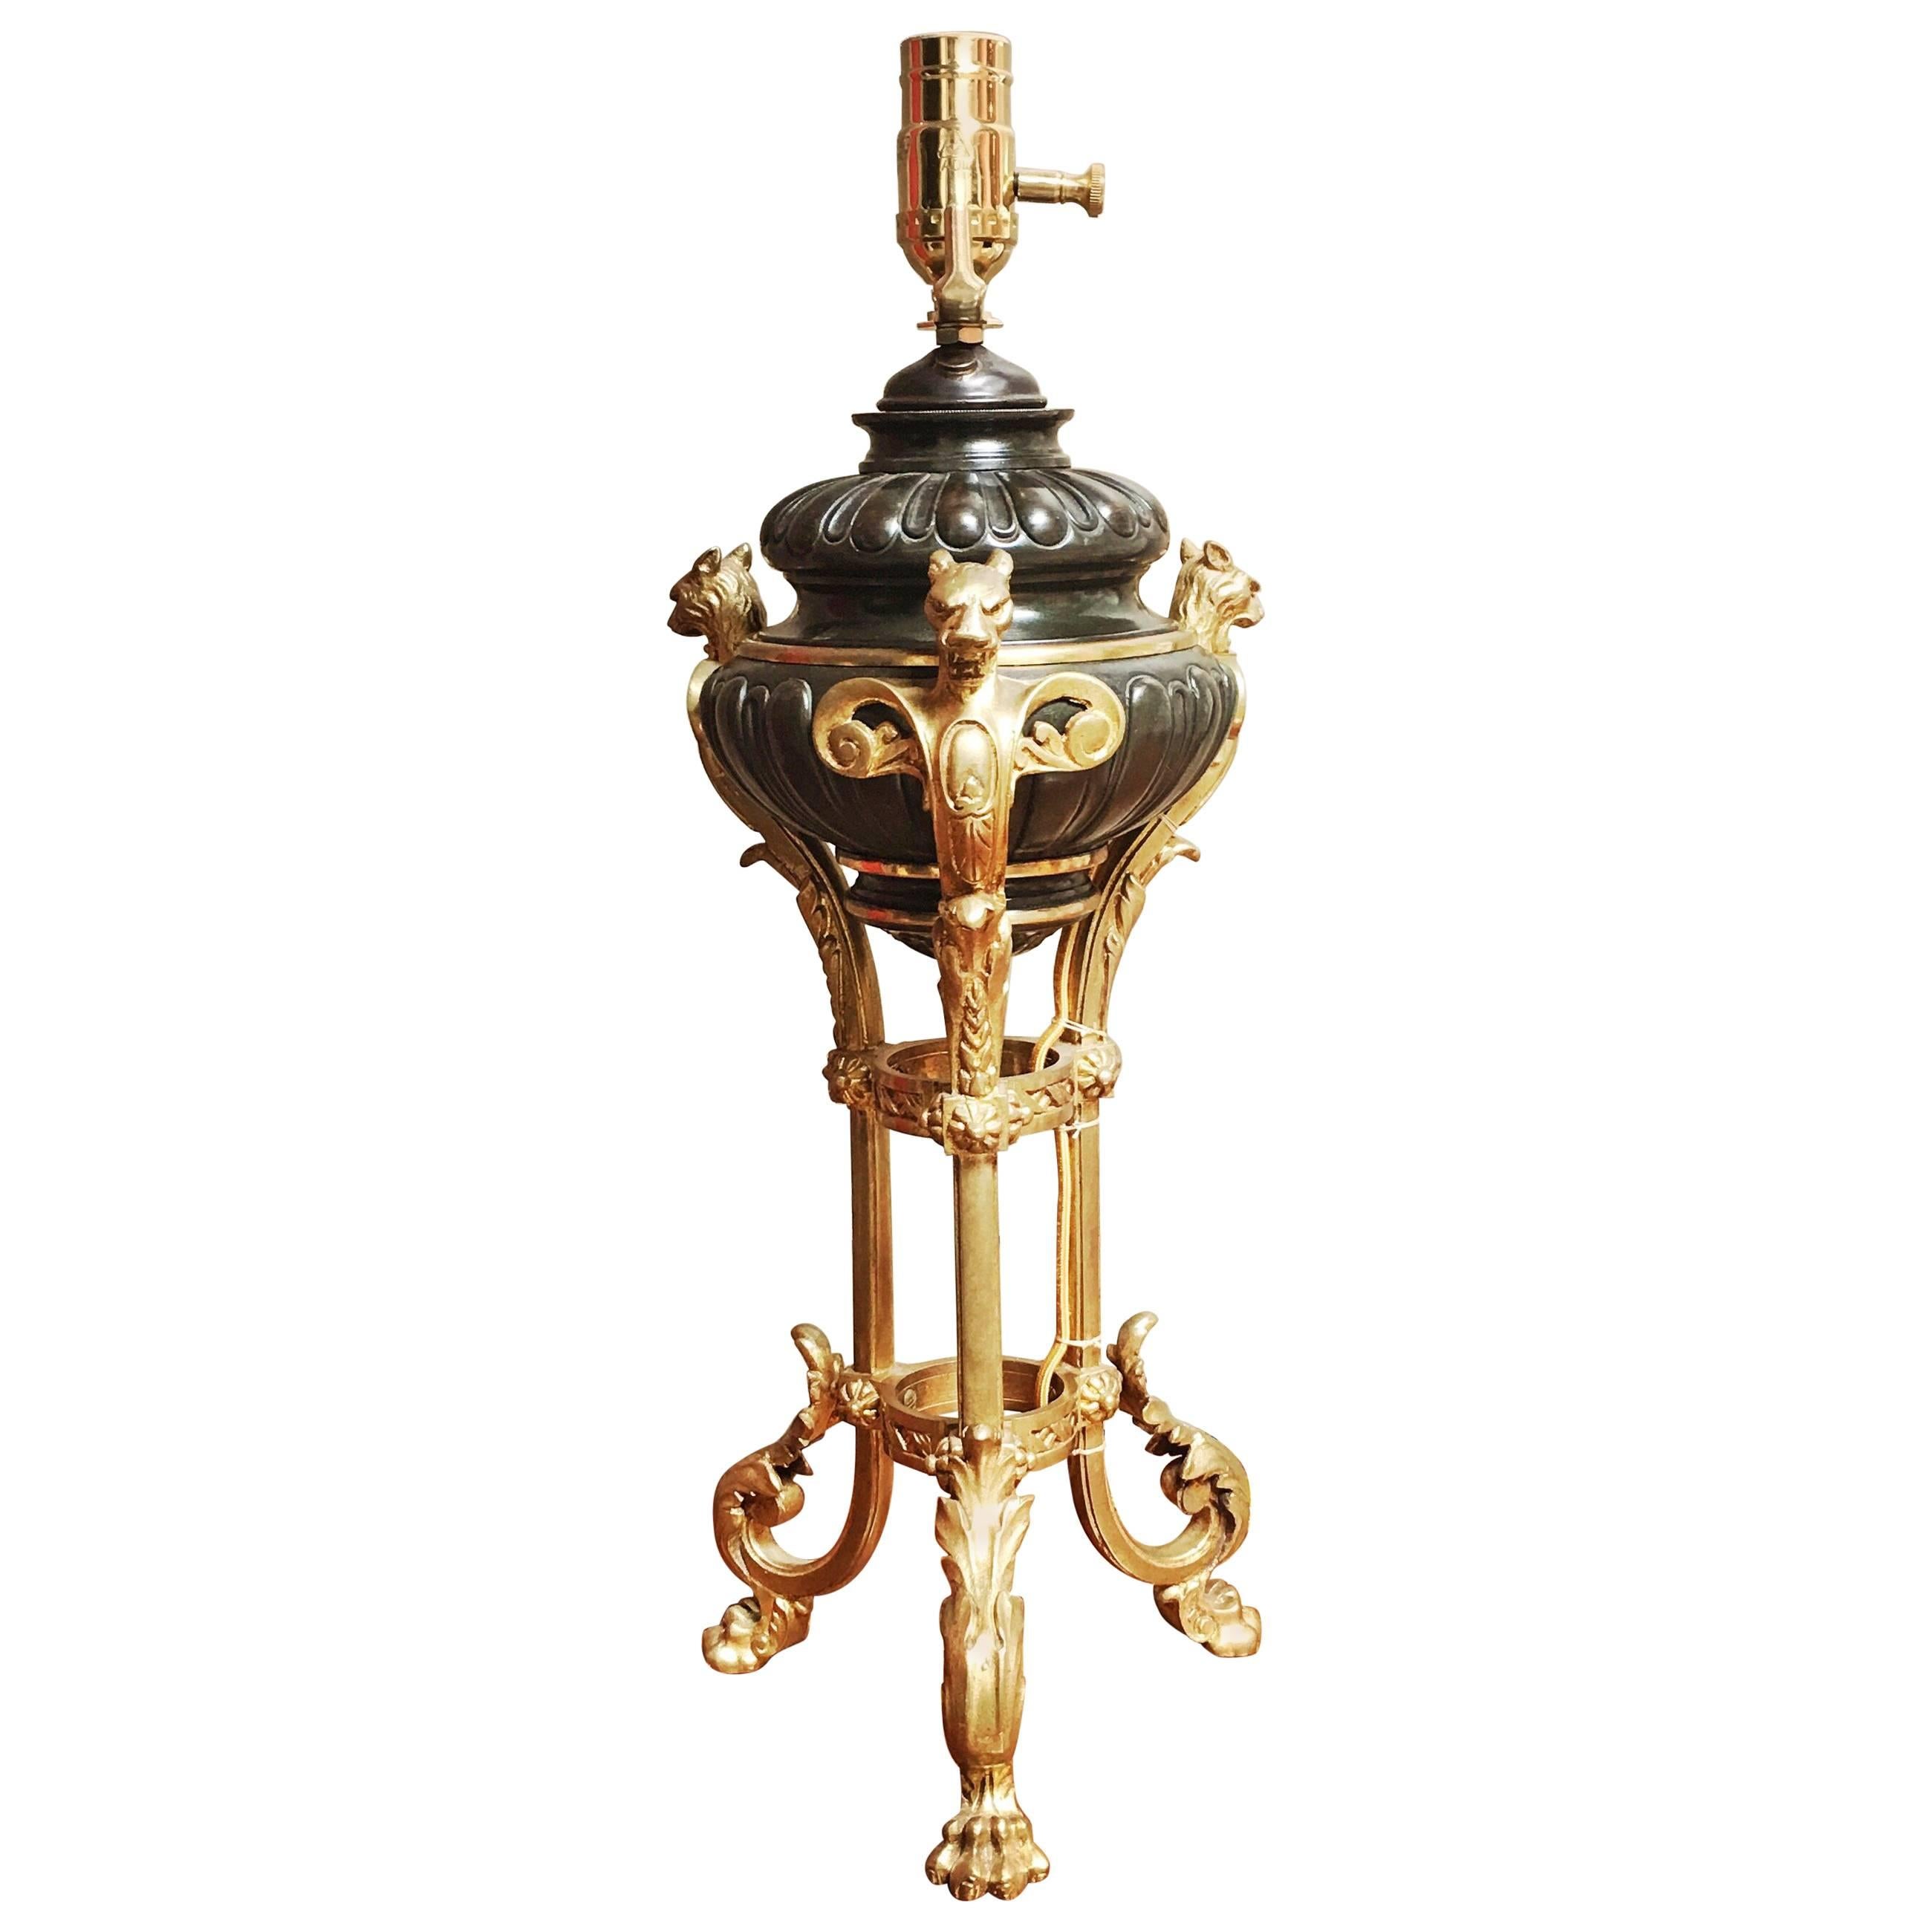 Base de lampe en bronze de style néo-empire français en vente